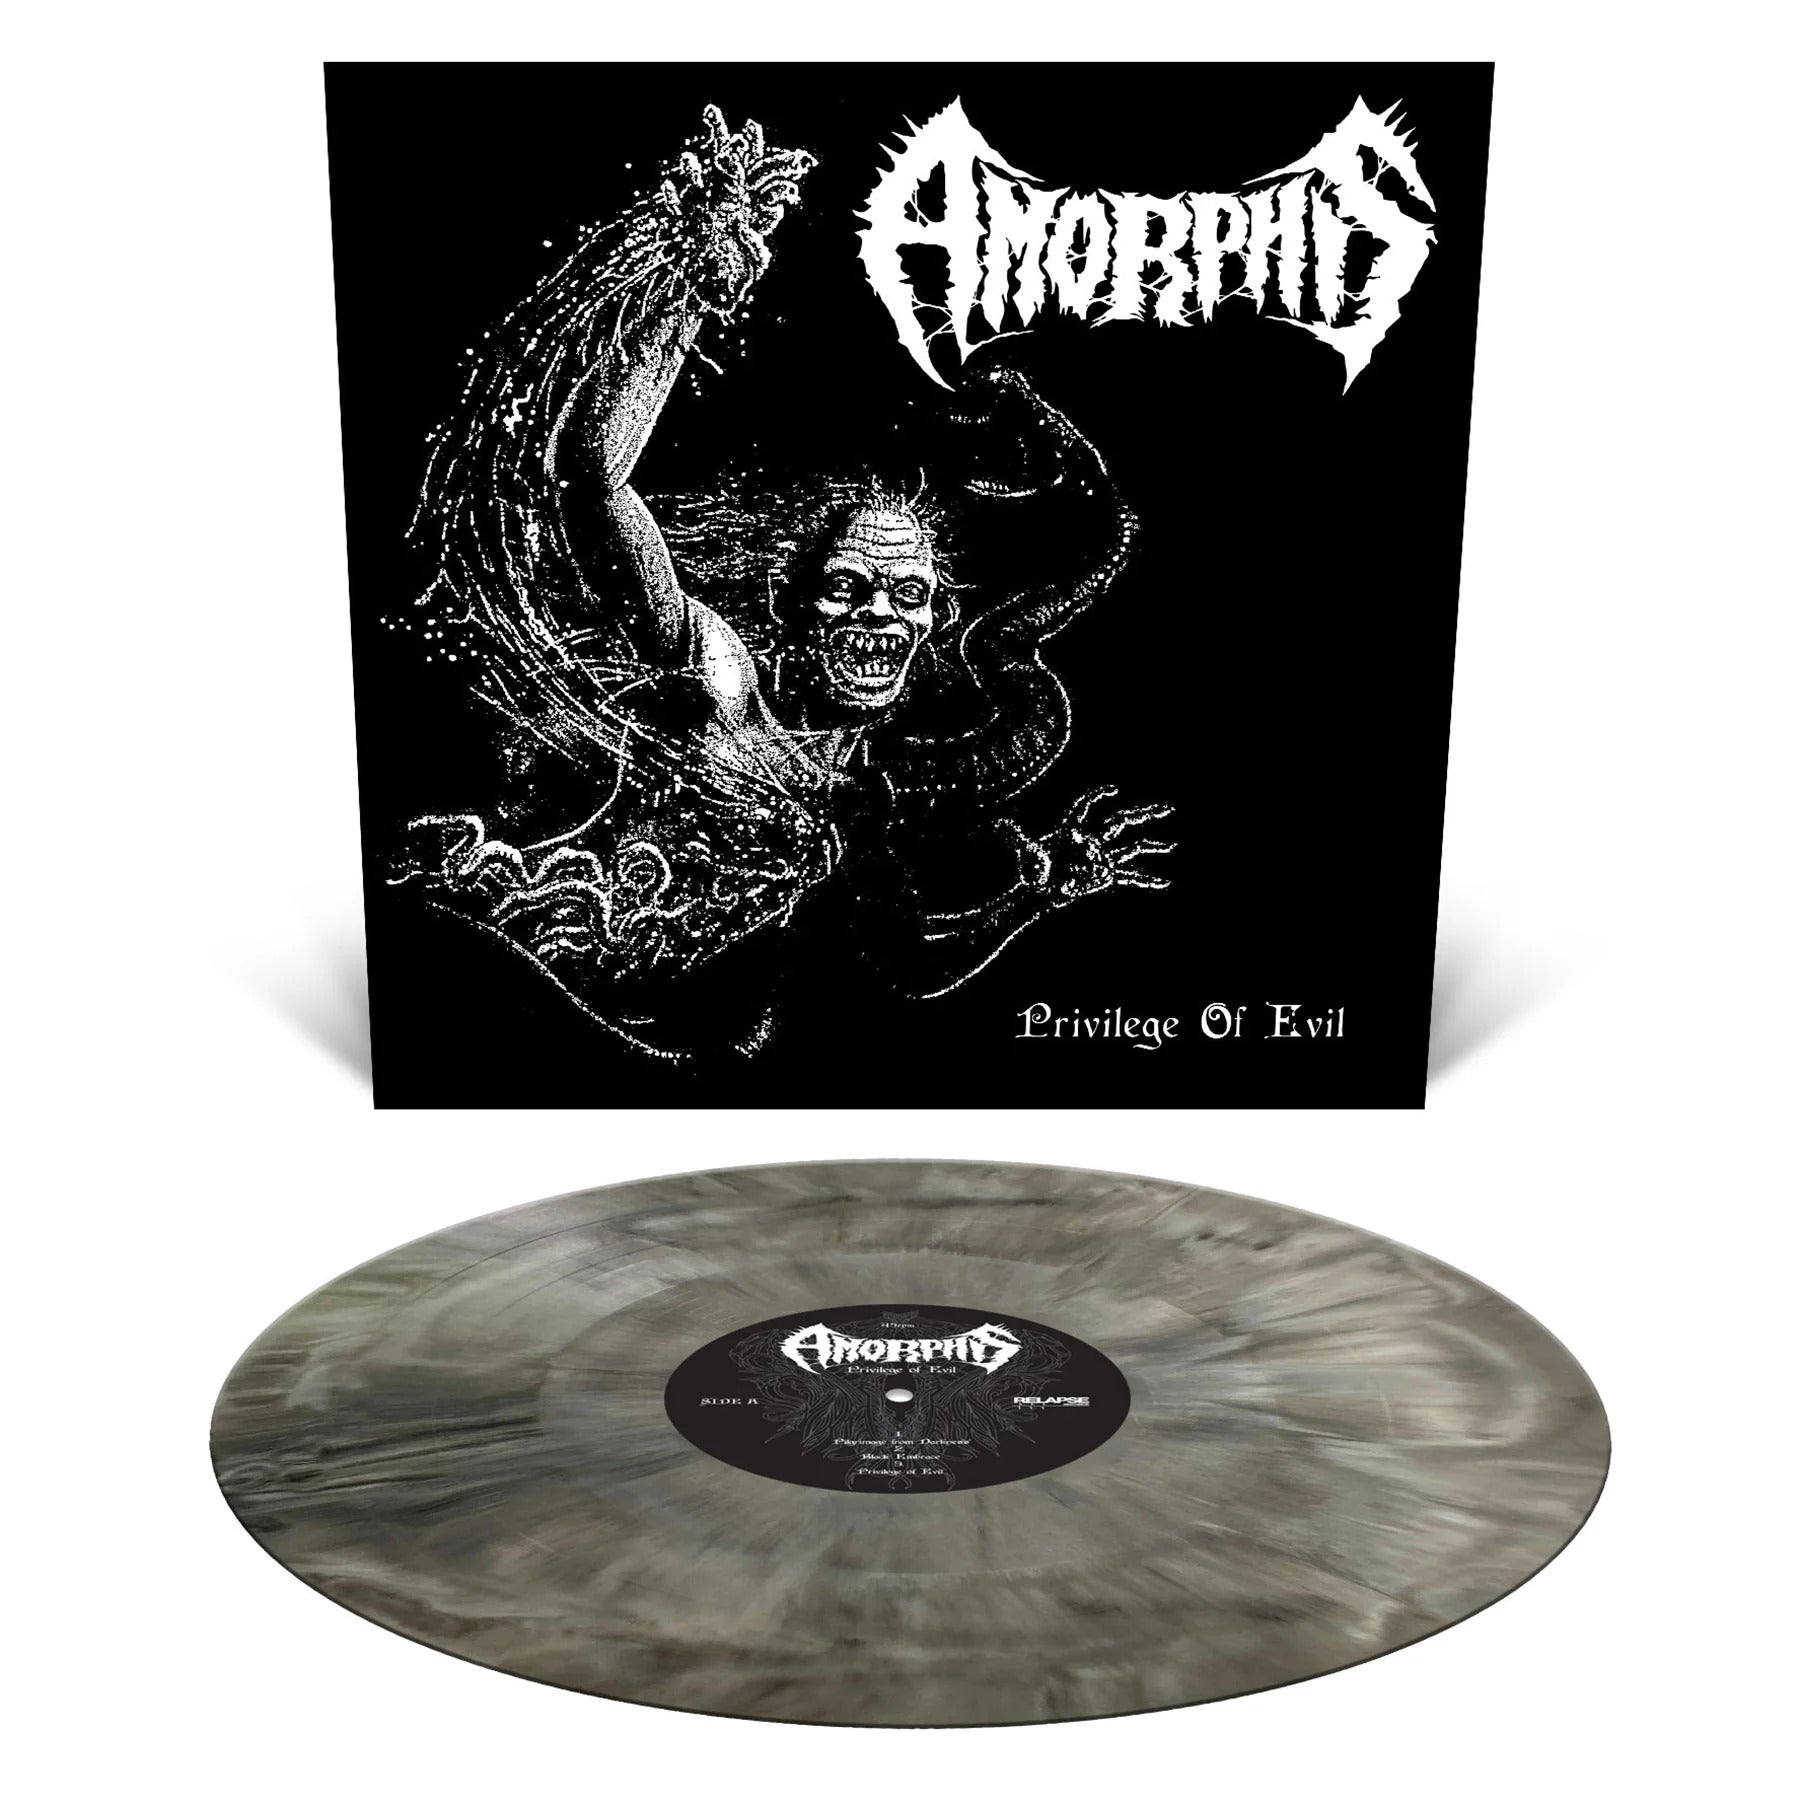 Amorphis "Privilege Of Evil" White / Black Galaxy Vinyl